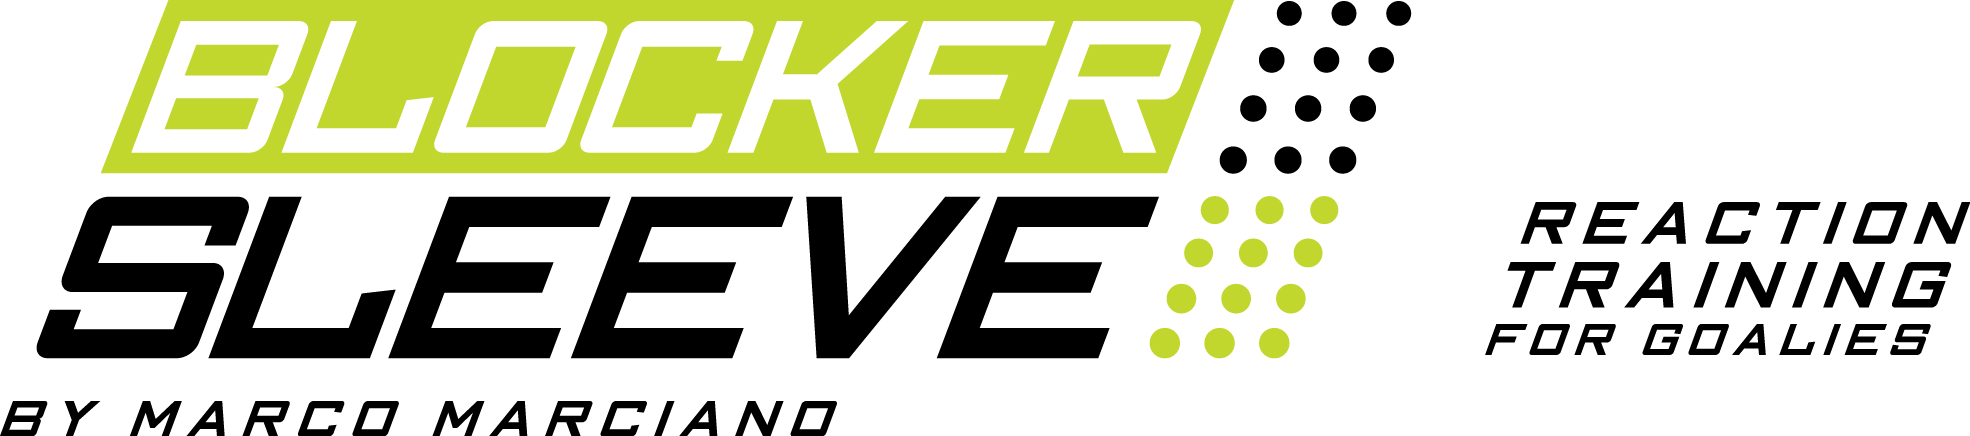 Blocker Sleeve Logo_Final_Couleur.png